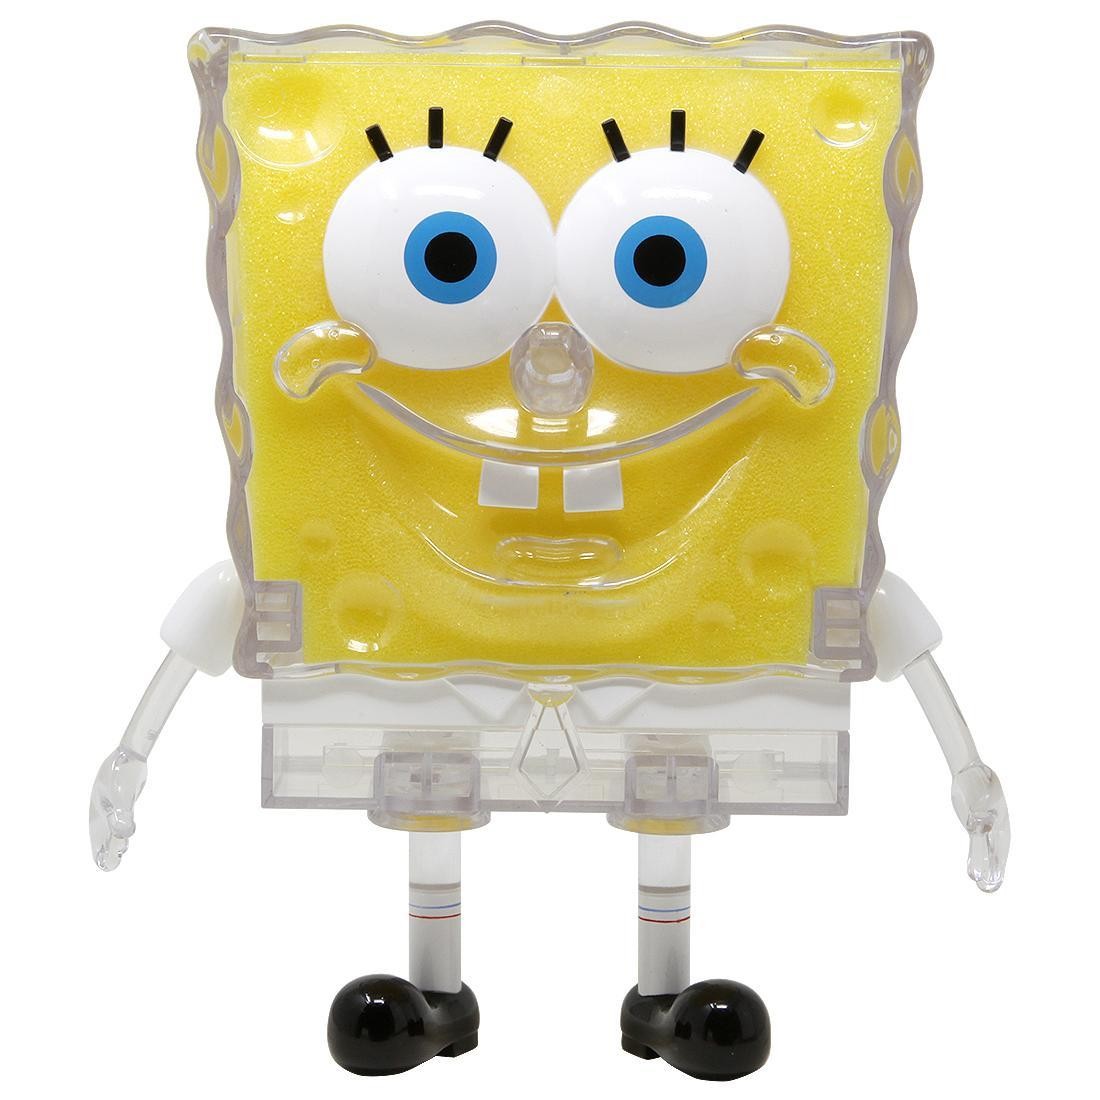 Kidrobot x Nickelodeon SpongeBob SquarePants Shellebration Figure - Clear Edition (yellow / clear)